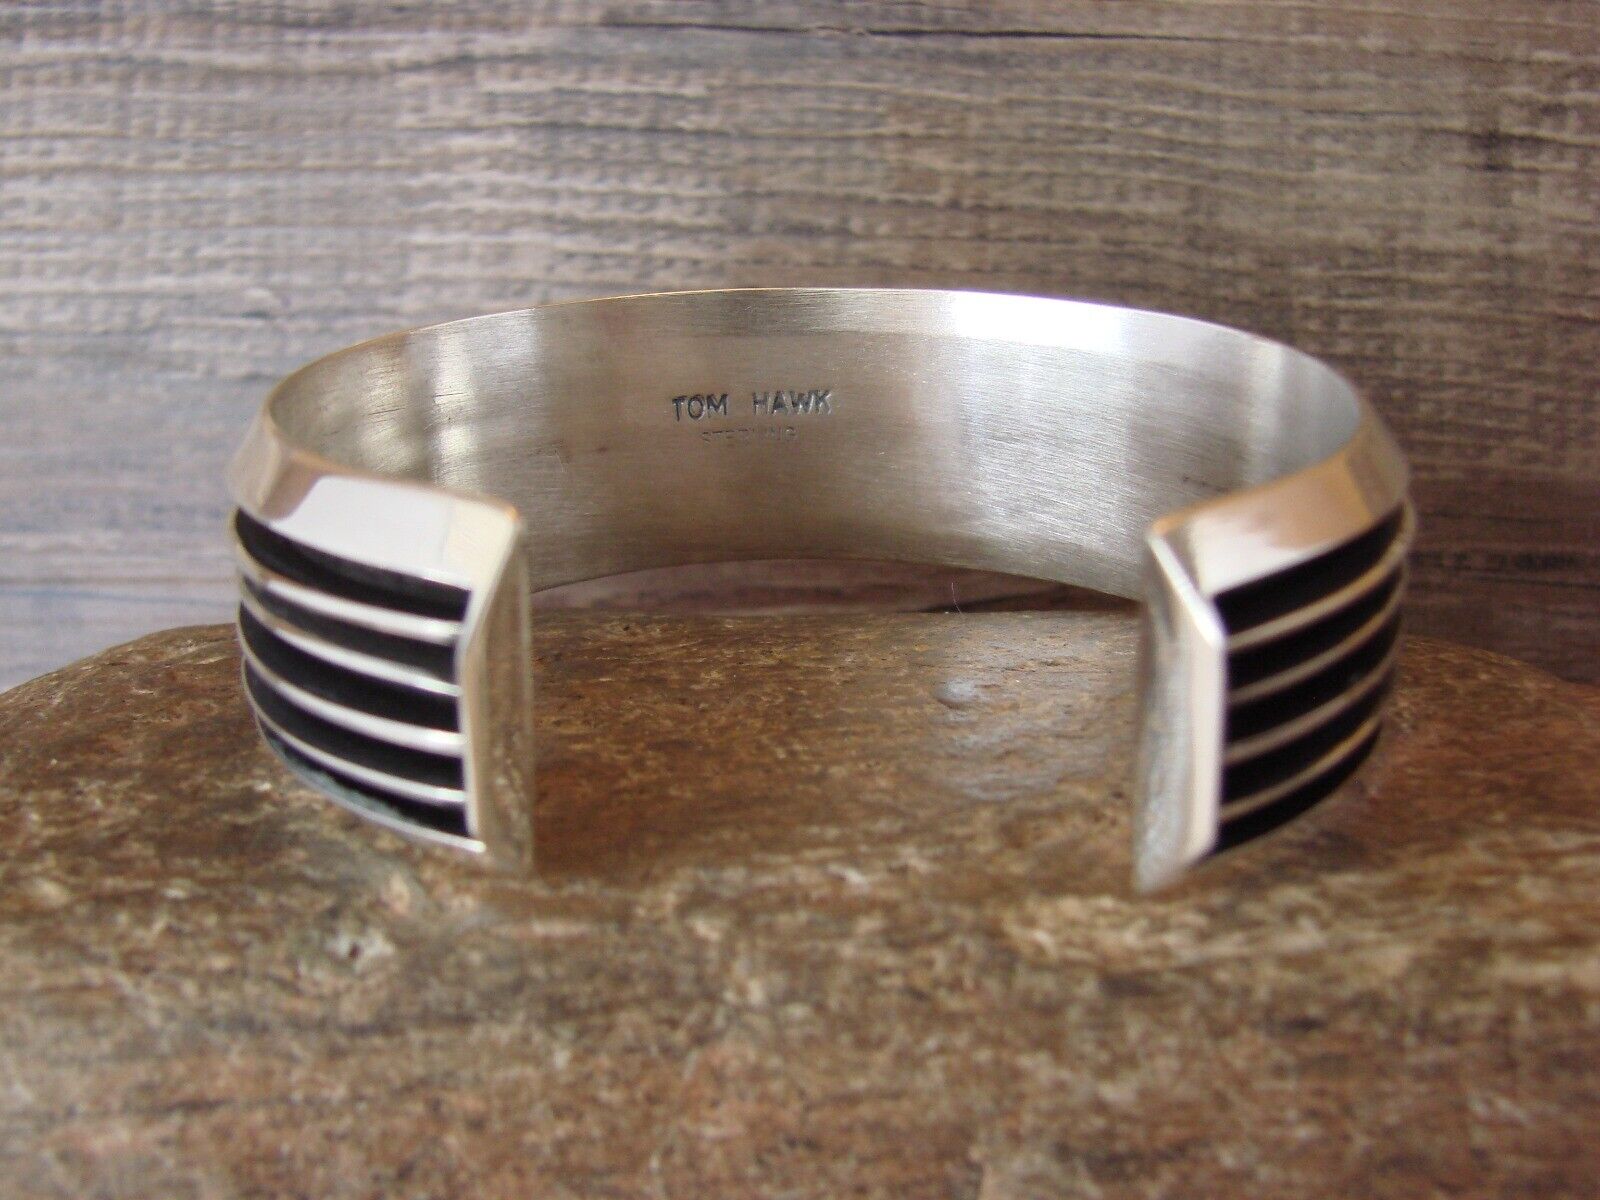 Native American Indian Jewelry Sterling Silver Bracelet by Tom Hawk